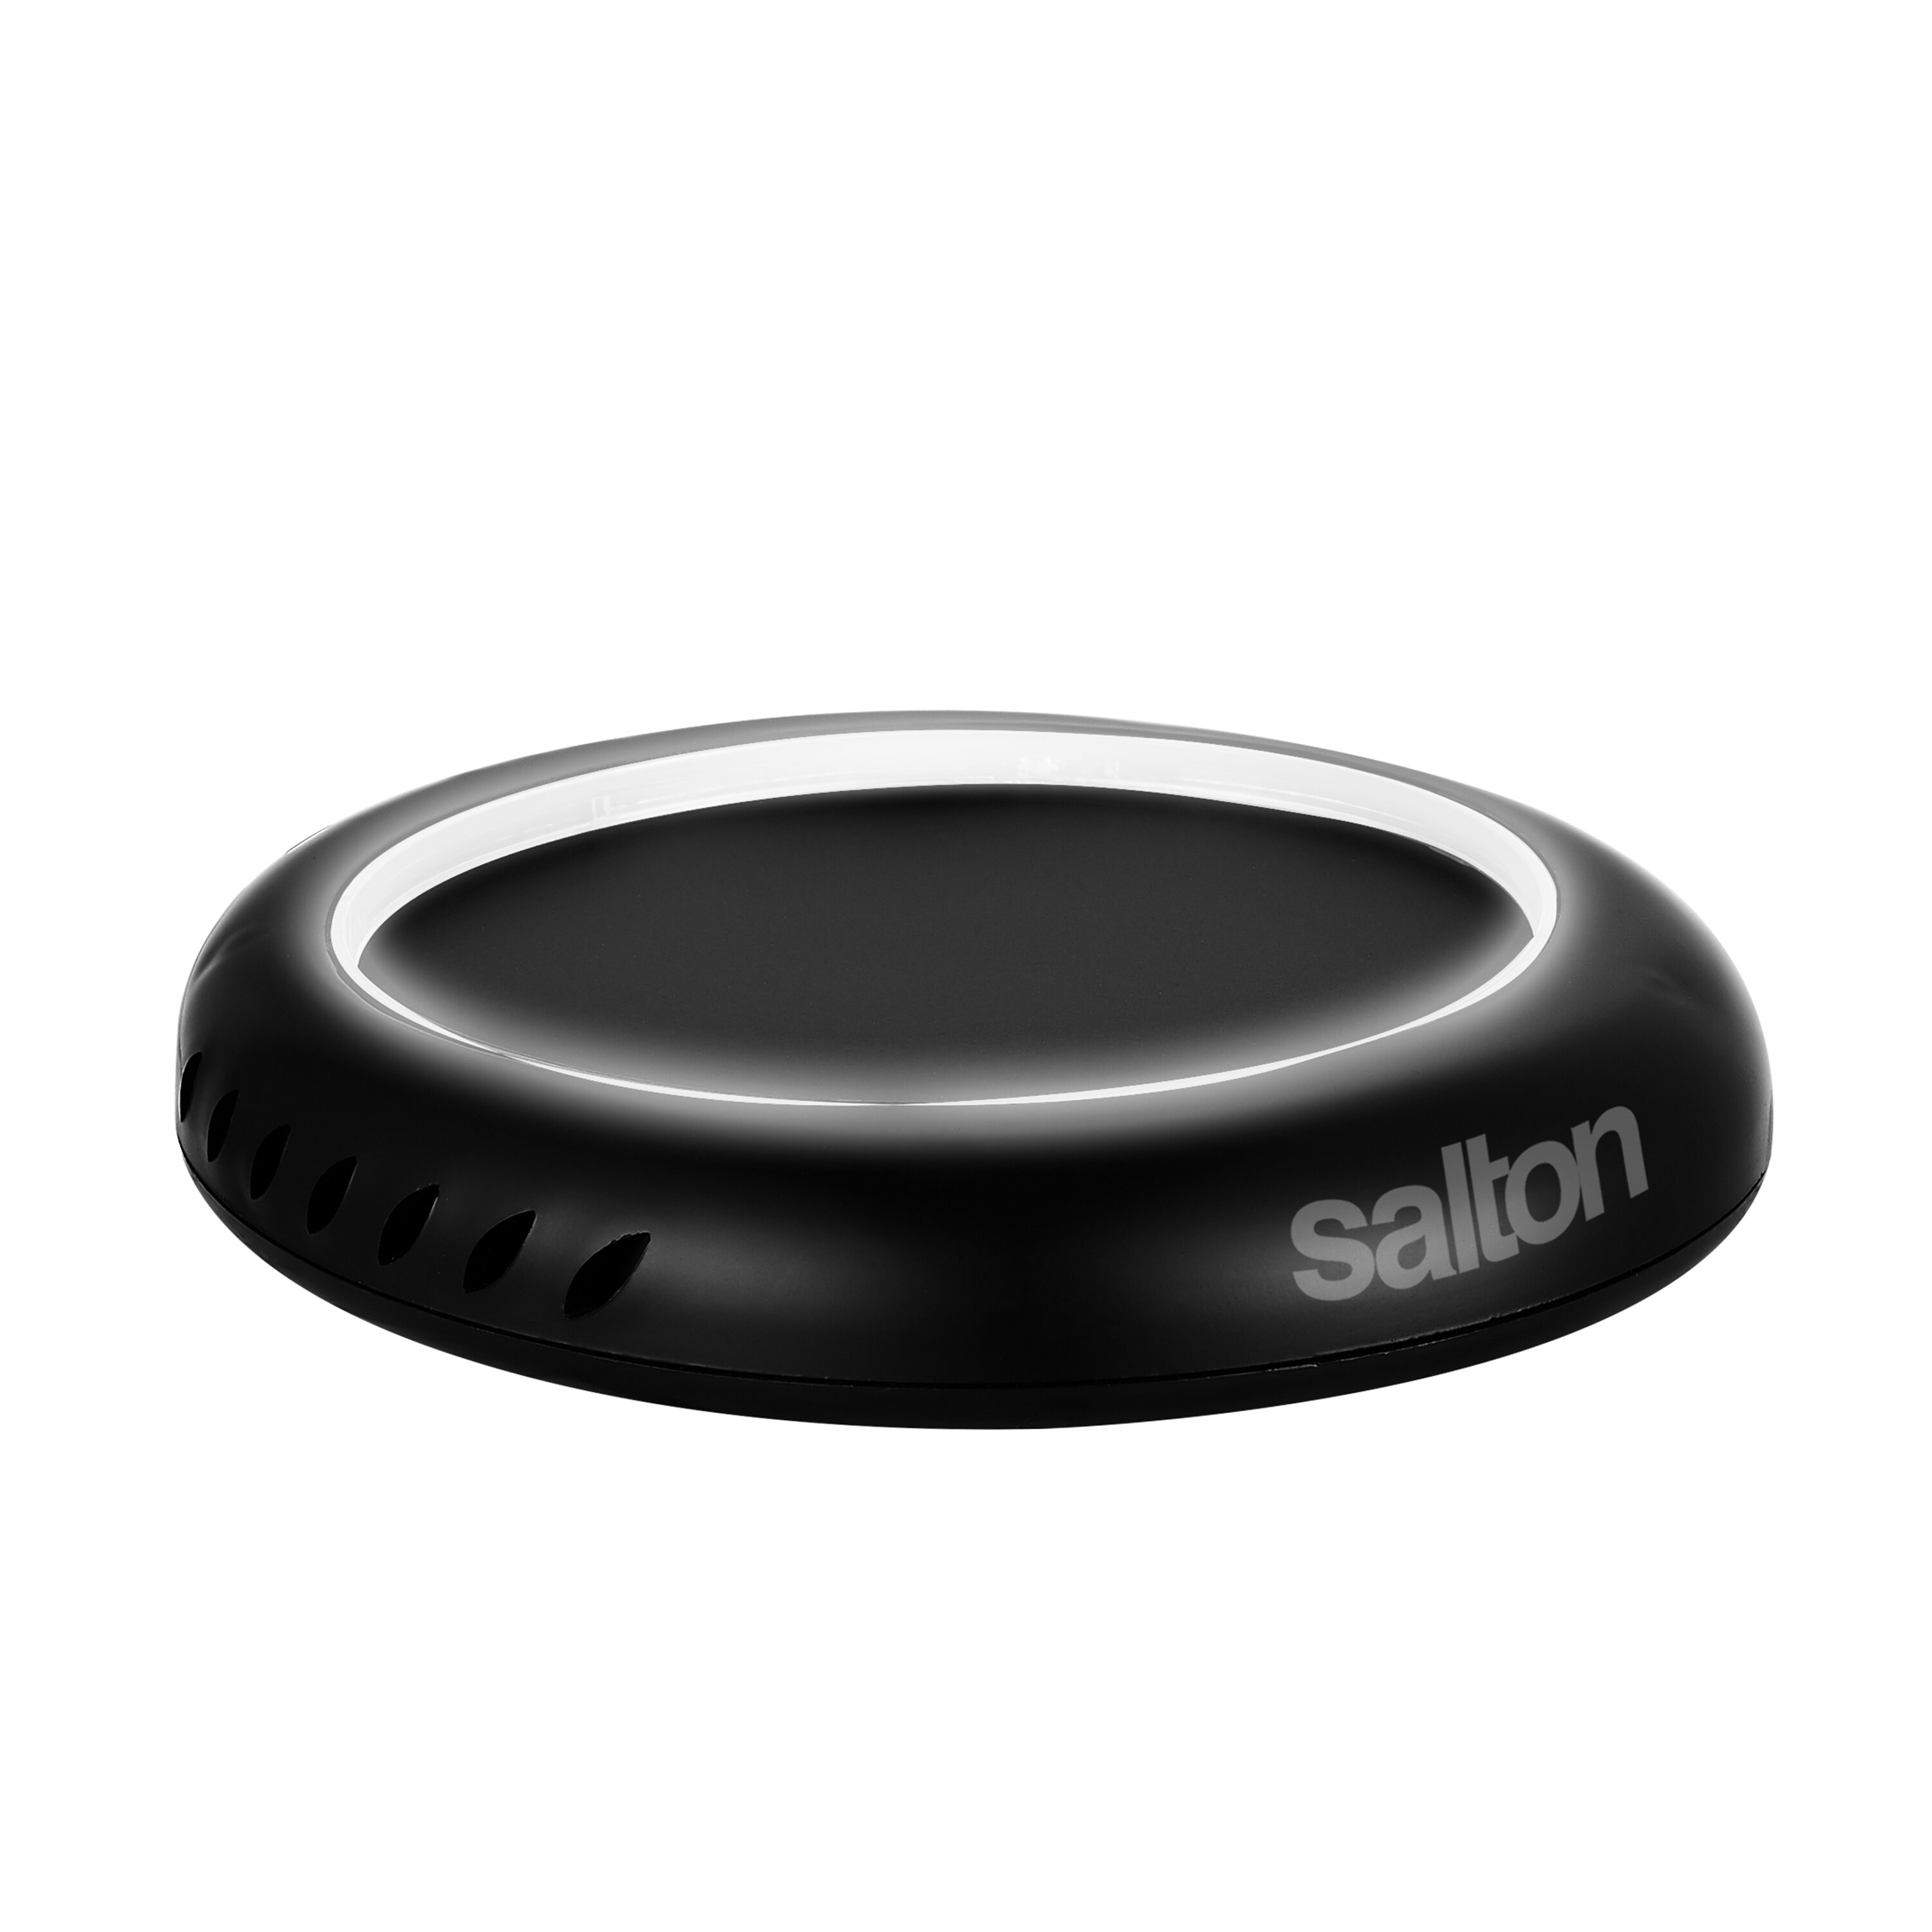 Salton 1-Station Residential Mug Warmer in the Buffet Servers